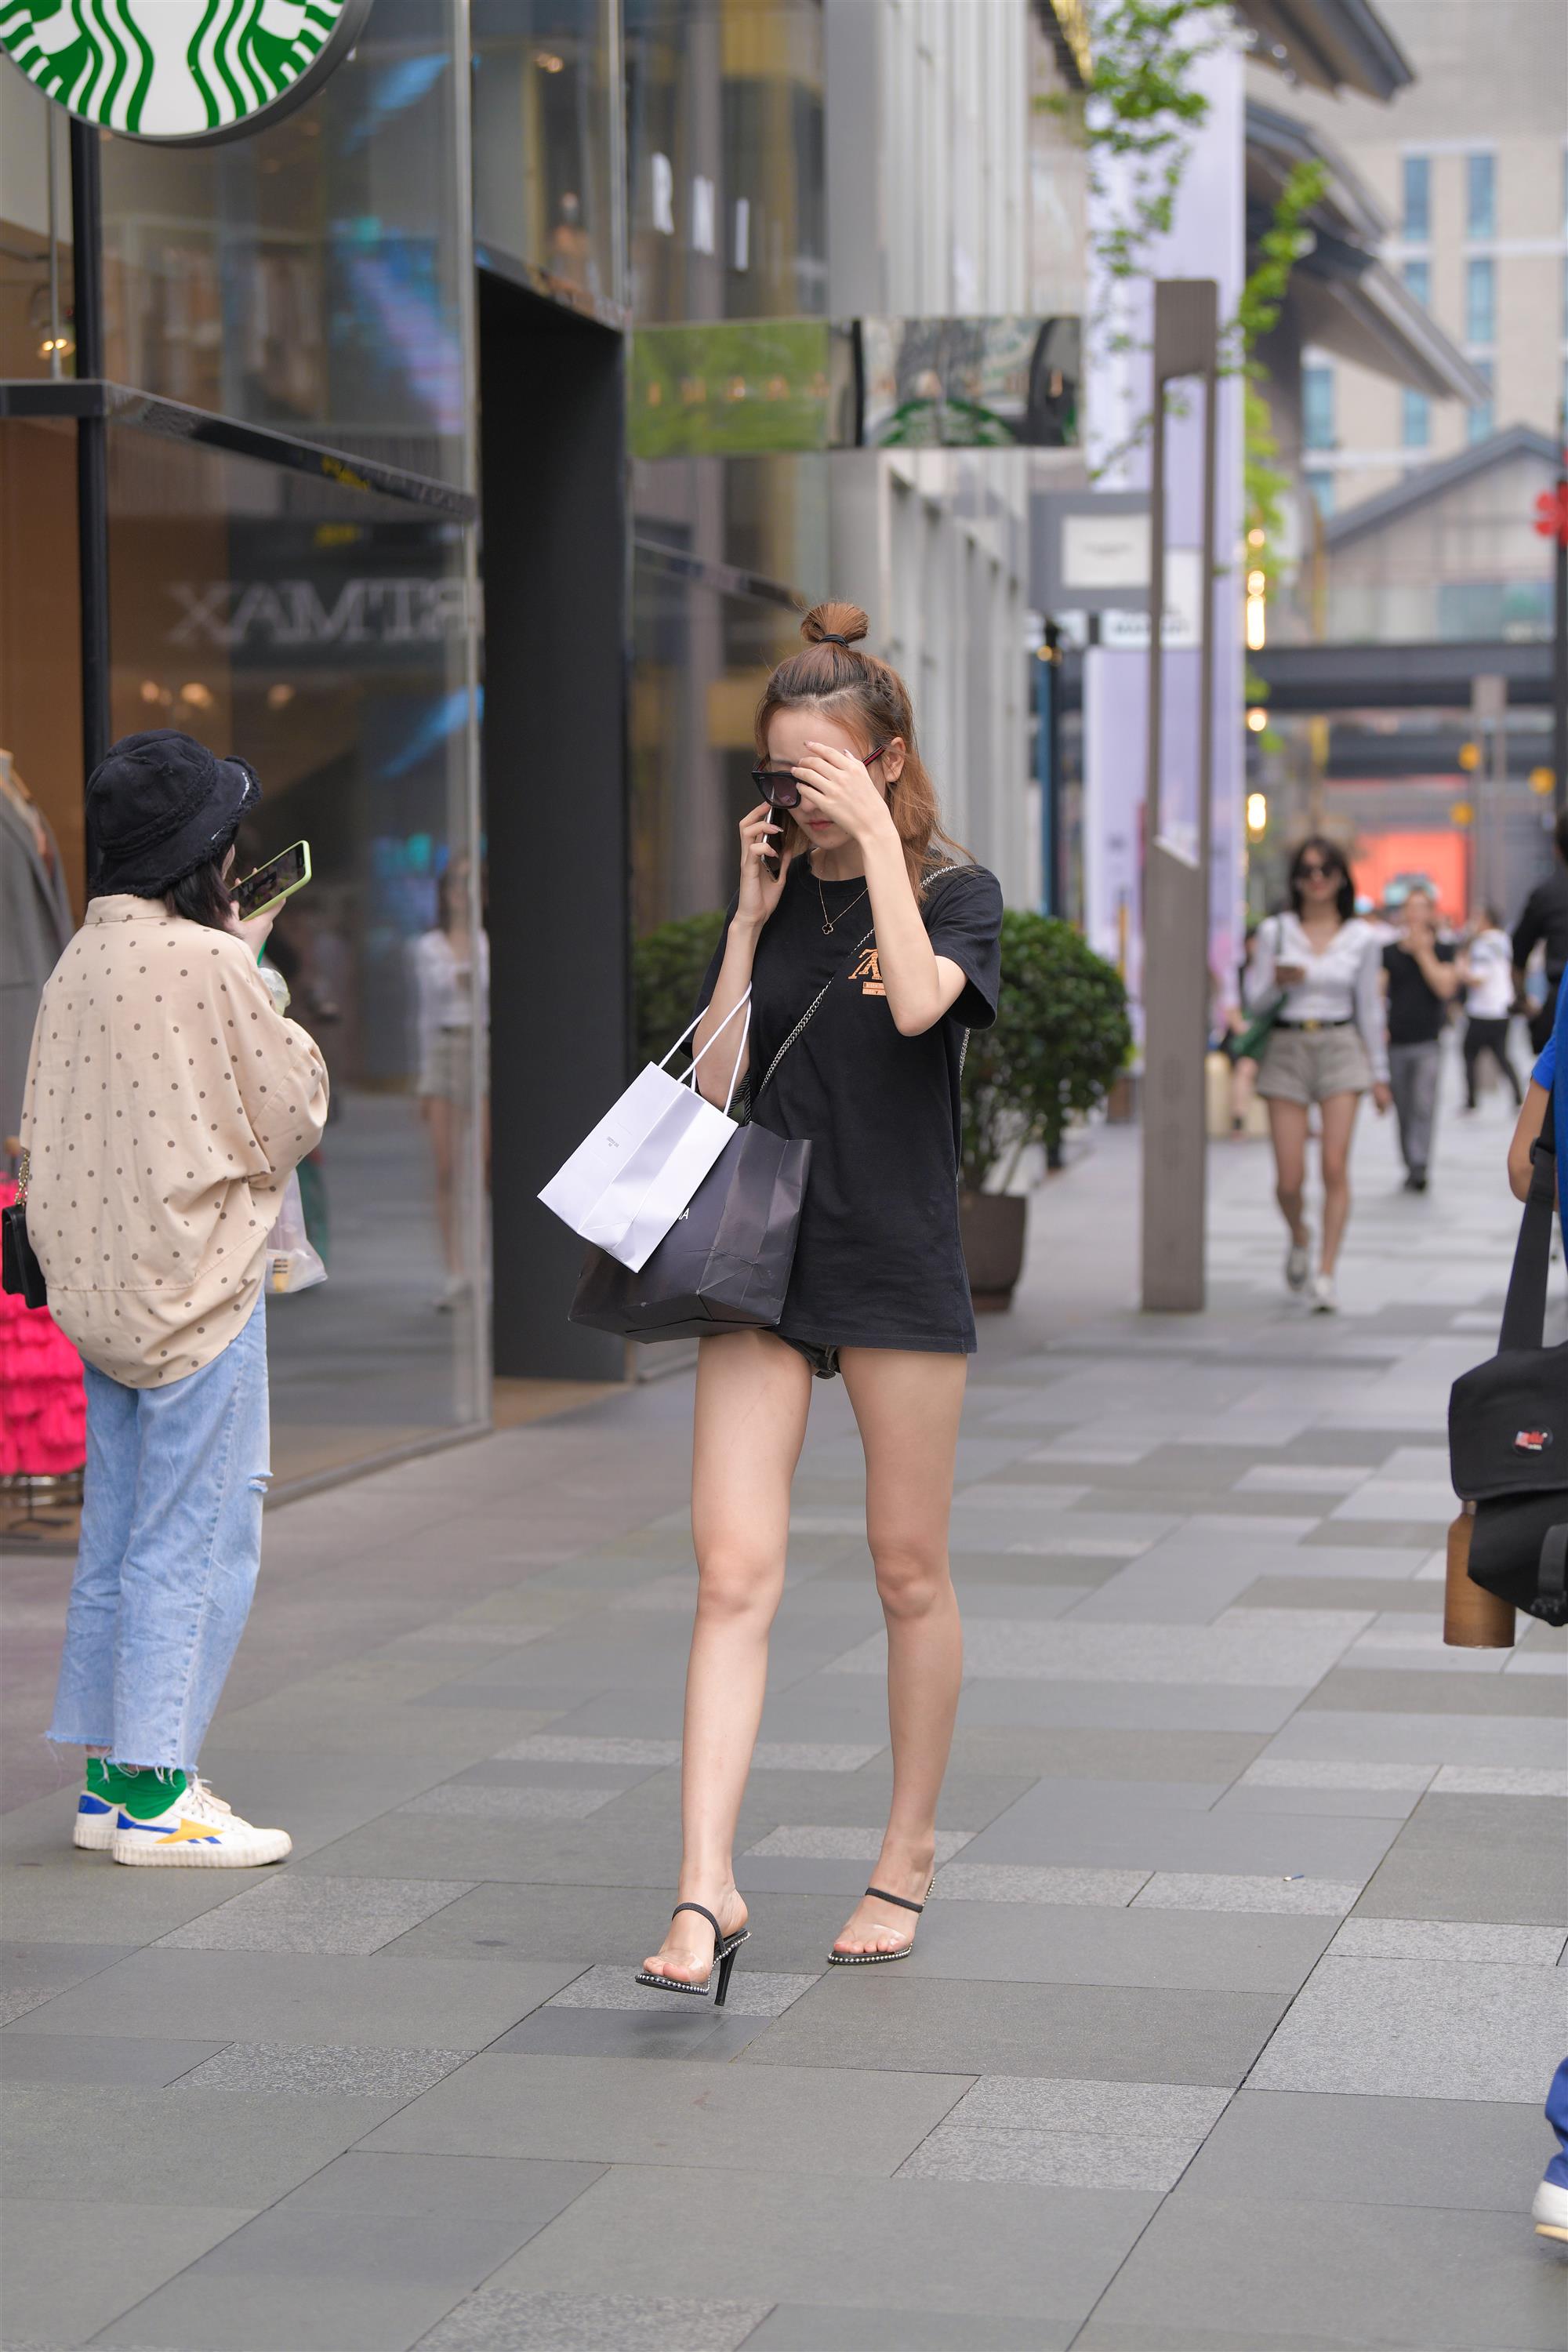 Street High heels and black skirt - 5.jpg